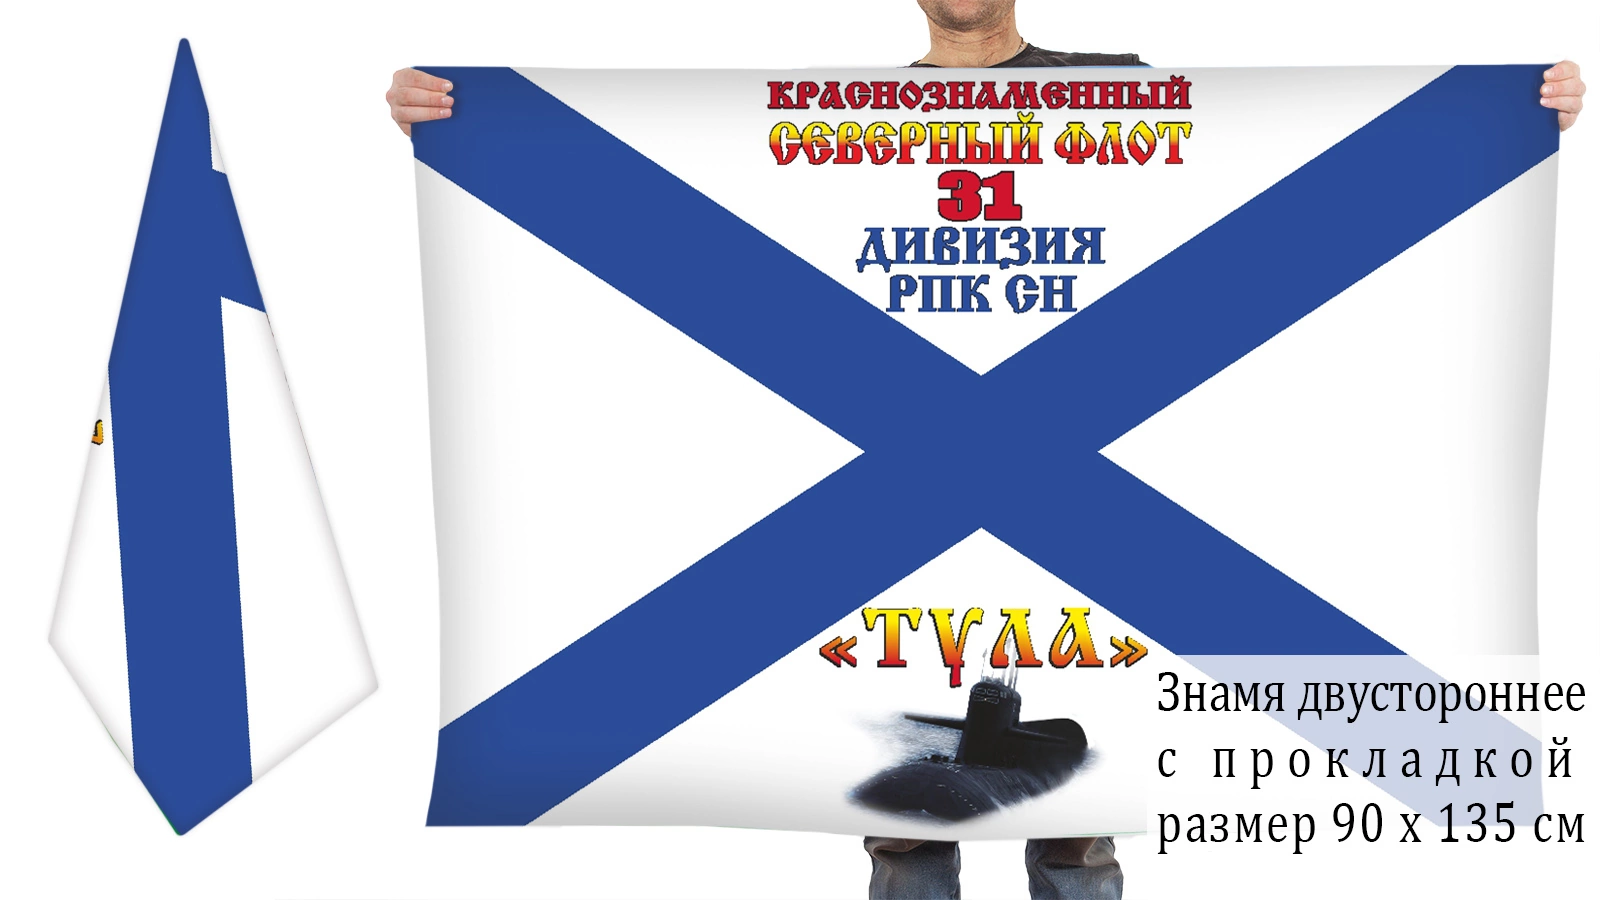 Двусторонний флаг РПКСН К-114 "Тула" 31 дивизии подводных лодок